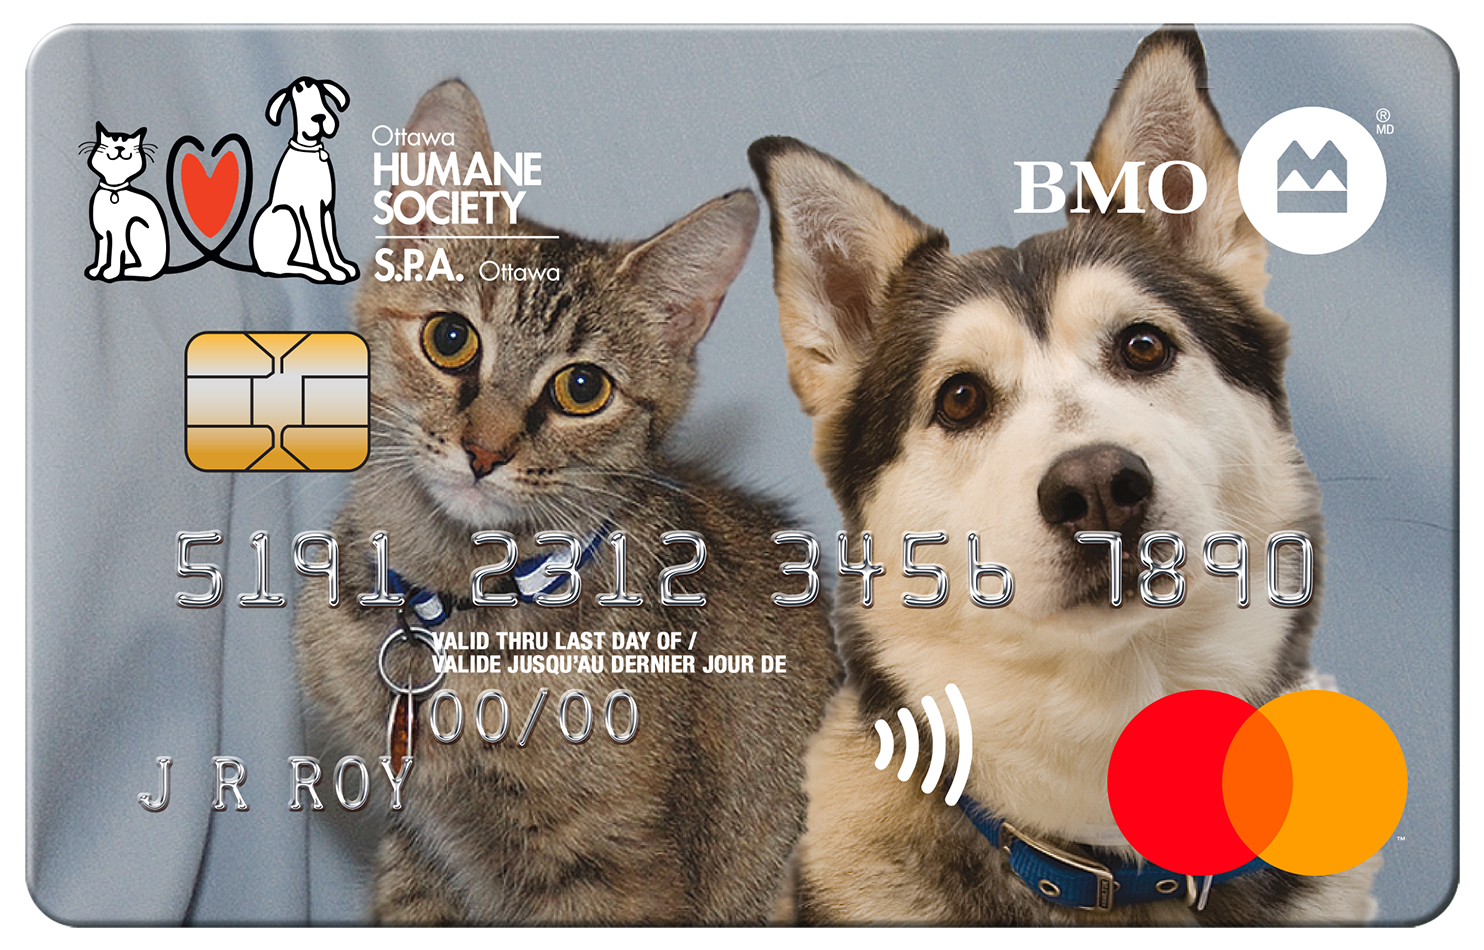 BMO Mastercard with animals.